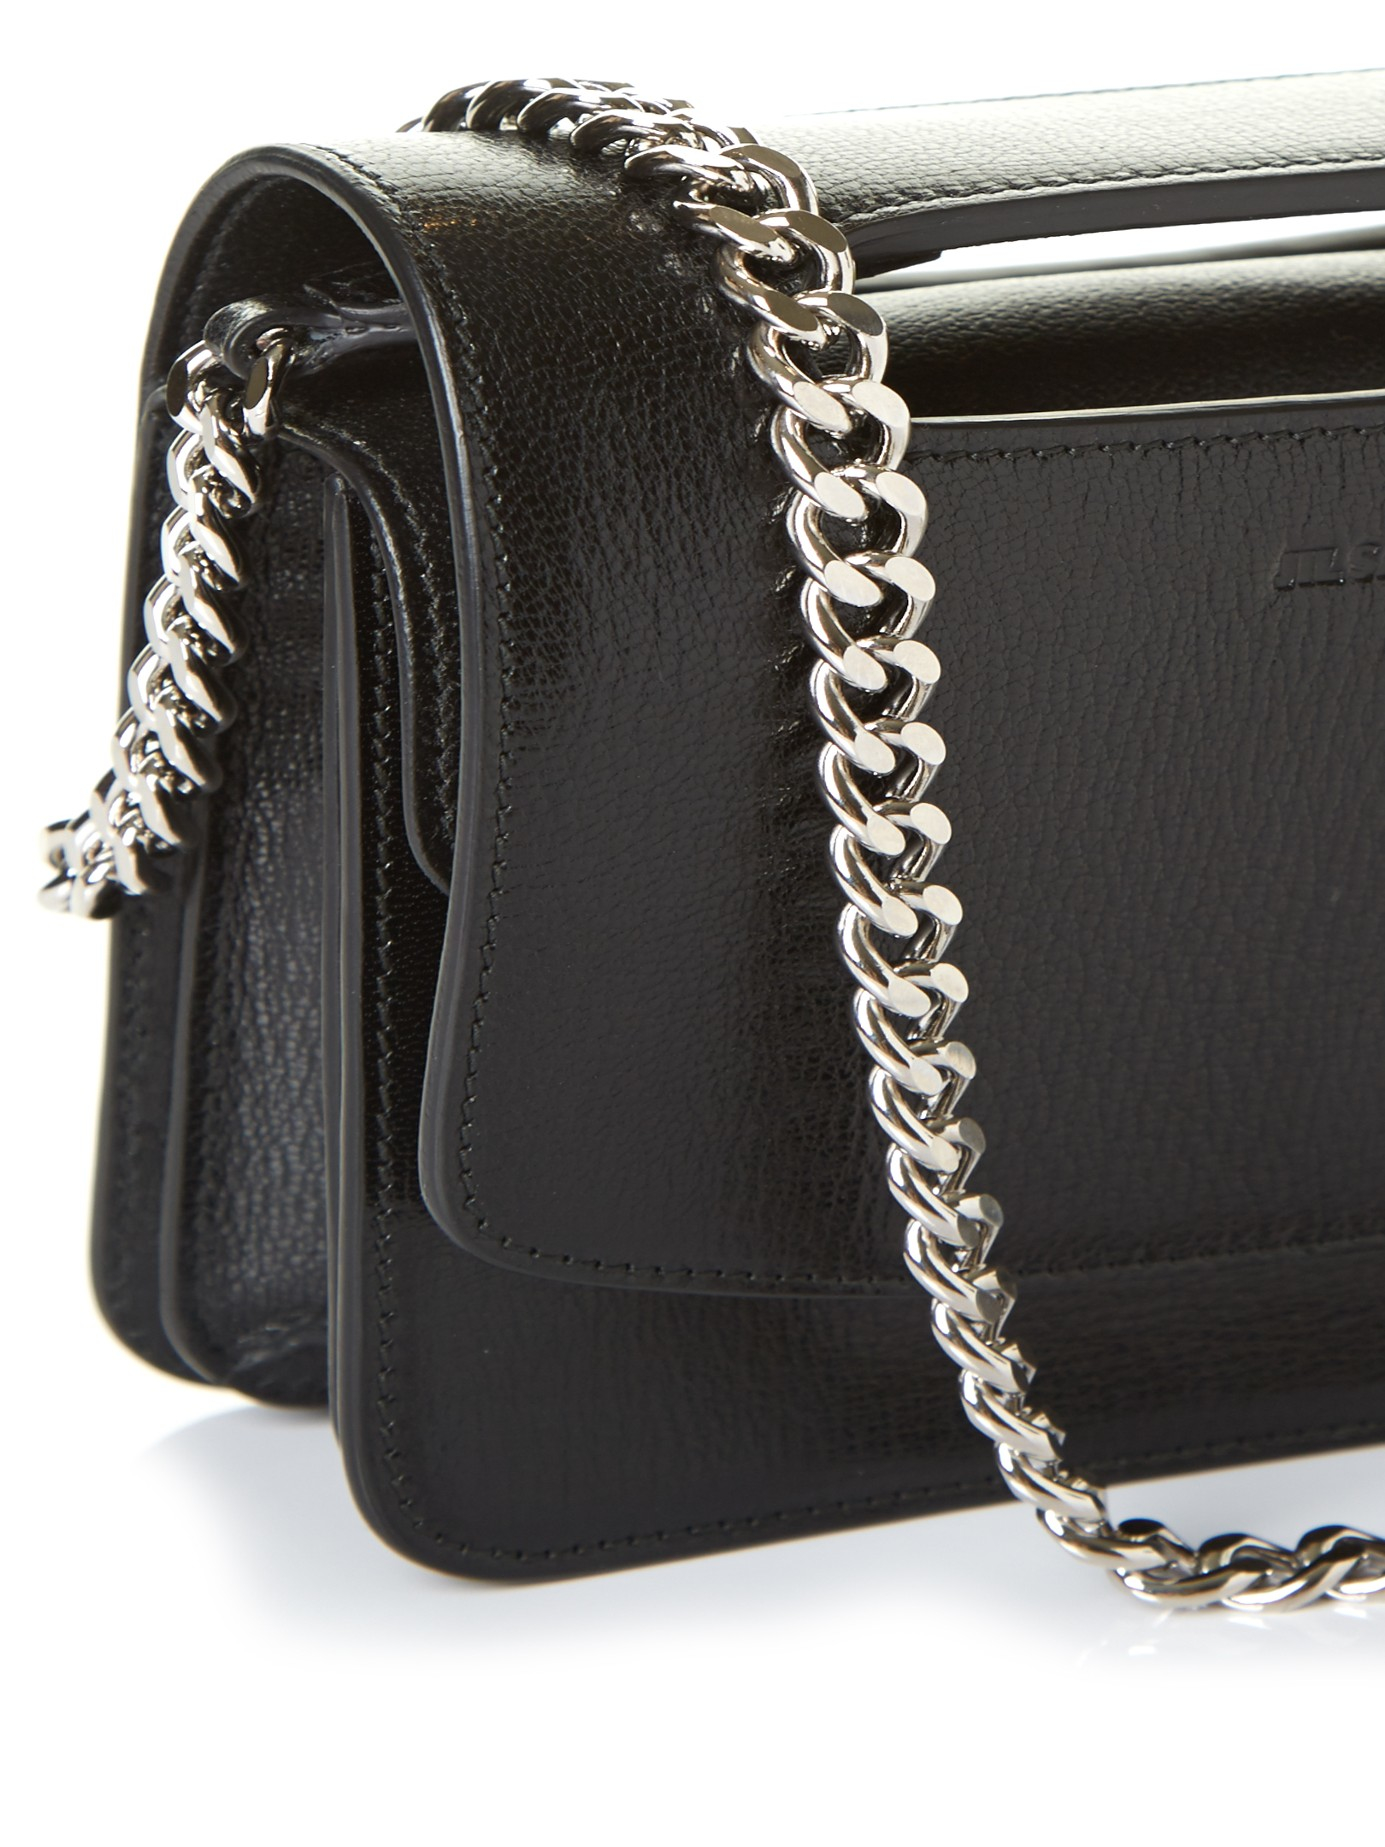 Jil sander Chain-strap Leather Cross-body Bag in Black | Lyst